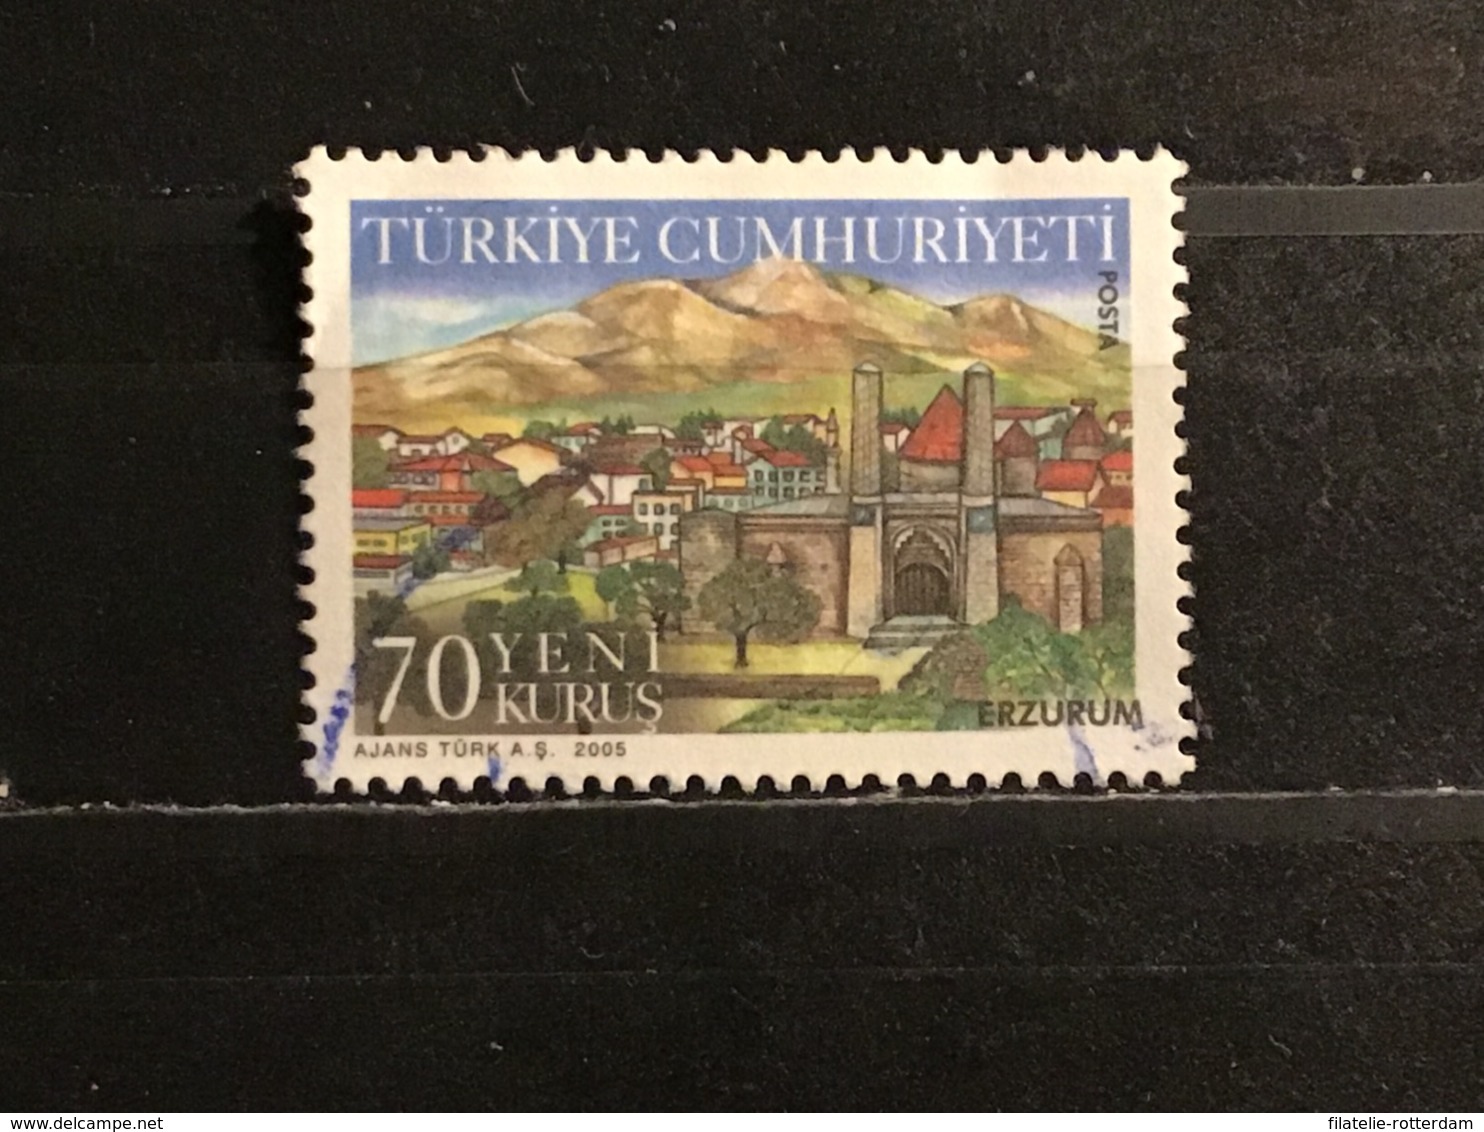 Turkije / Turkey - Toerisme Erzurum (70) 2005 - Oblitérés